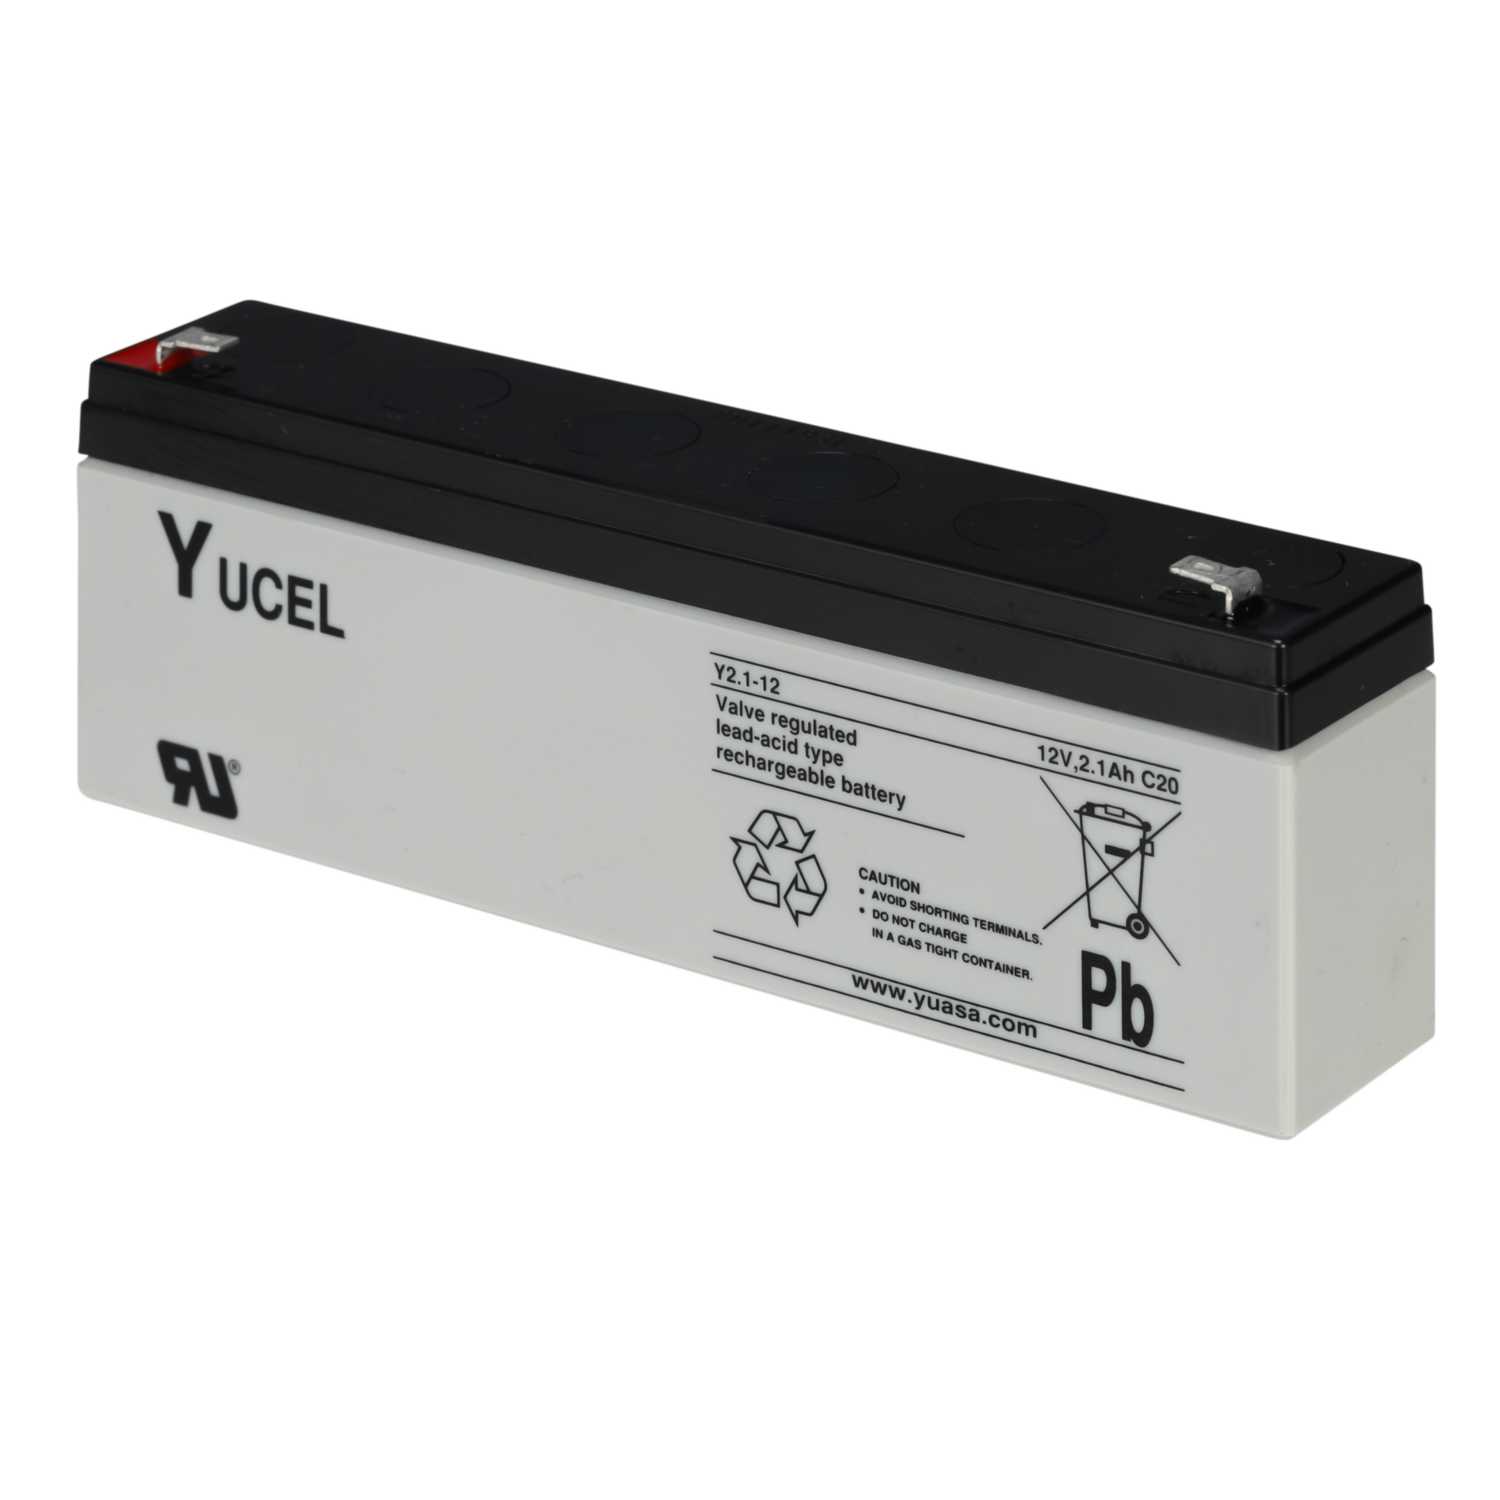 Yucel Yuasa Y2.1-12 Sealed Lead Acid Battery 12v 2.1ah Rechargeable Torch Light